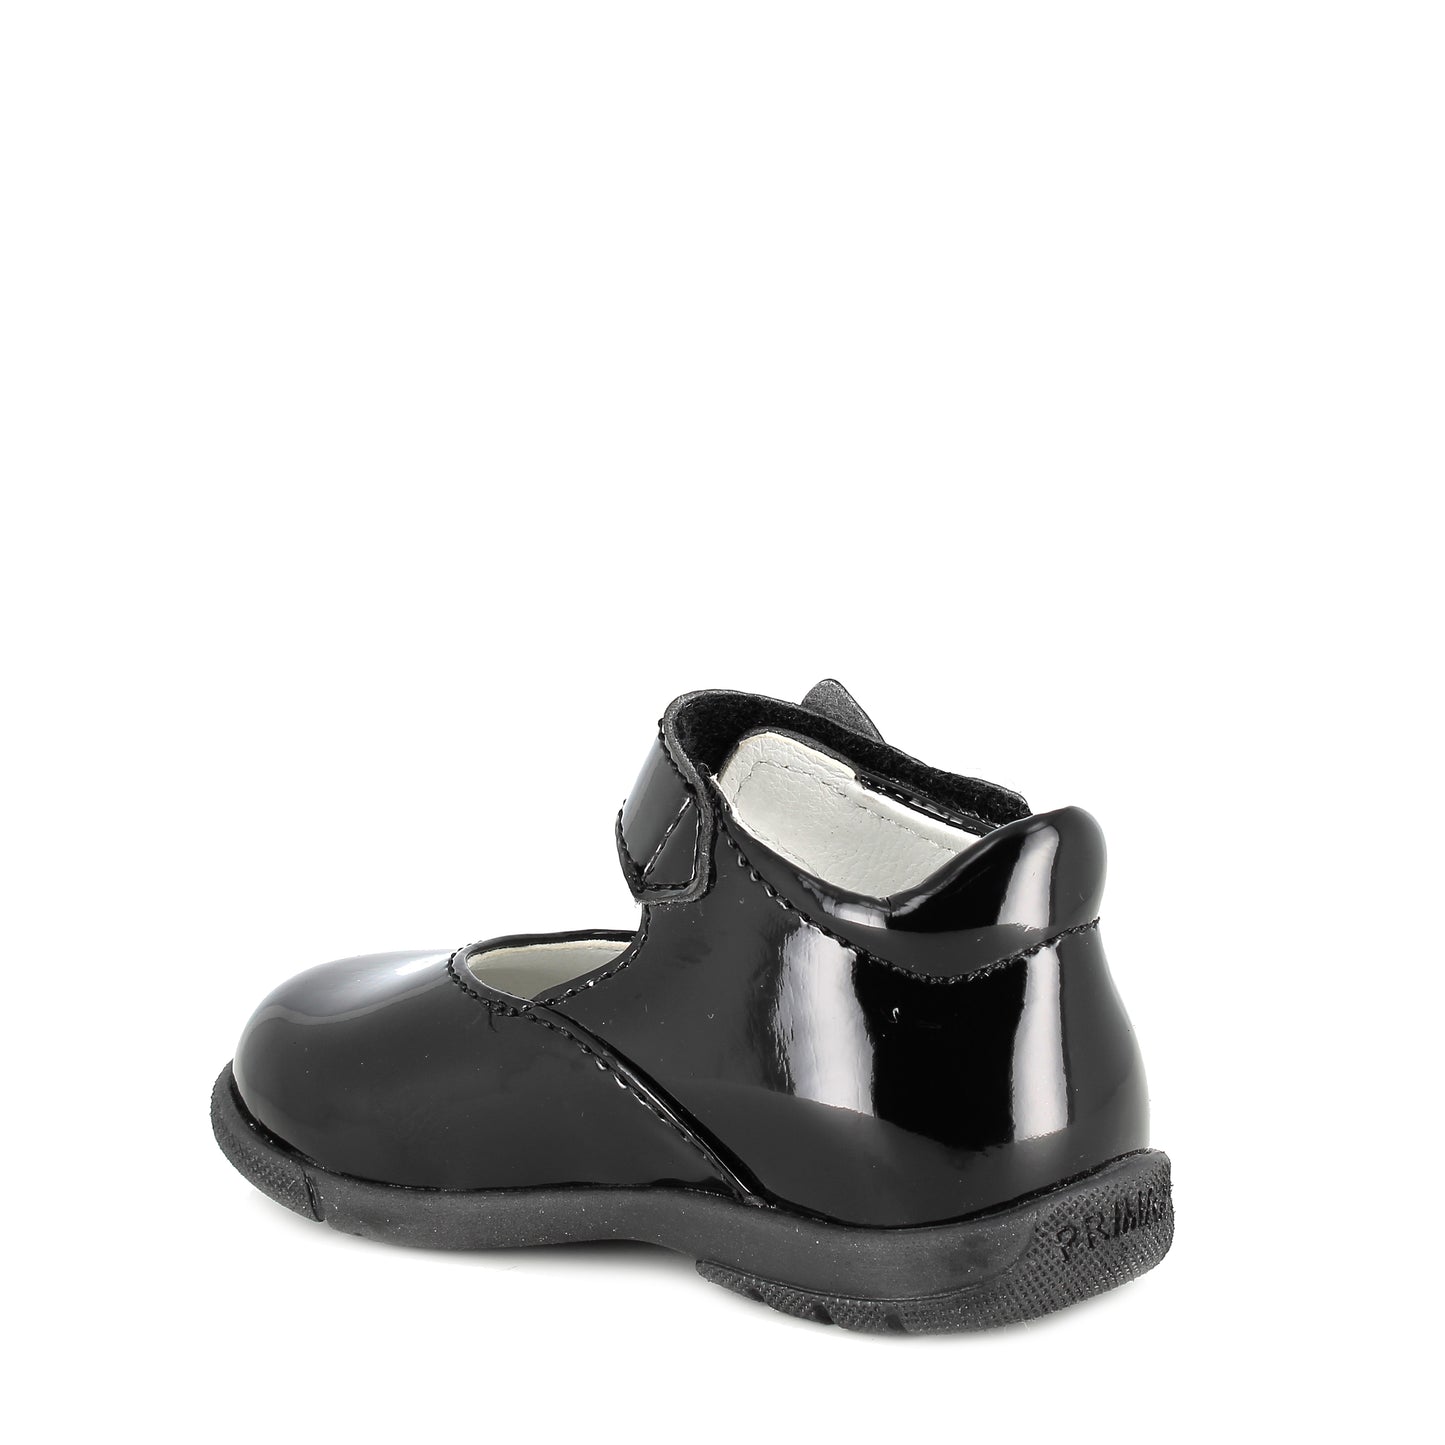 Primigi | 4901200 | Baby | Girls Velcro Shoe | Black Patent